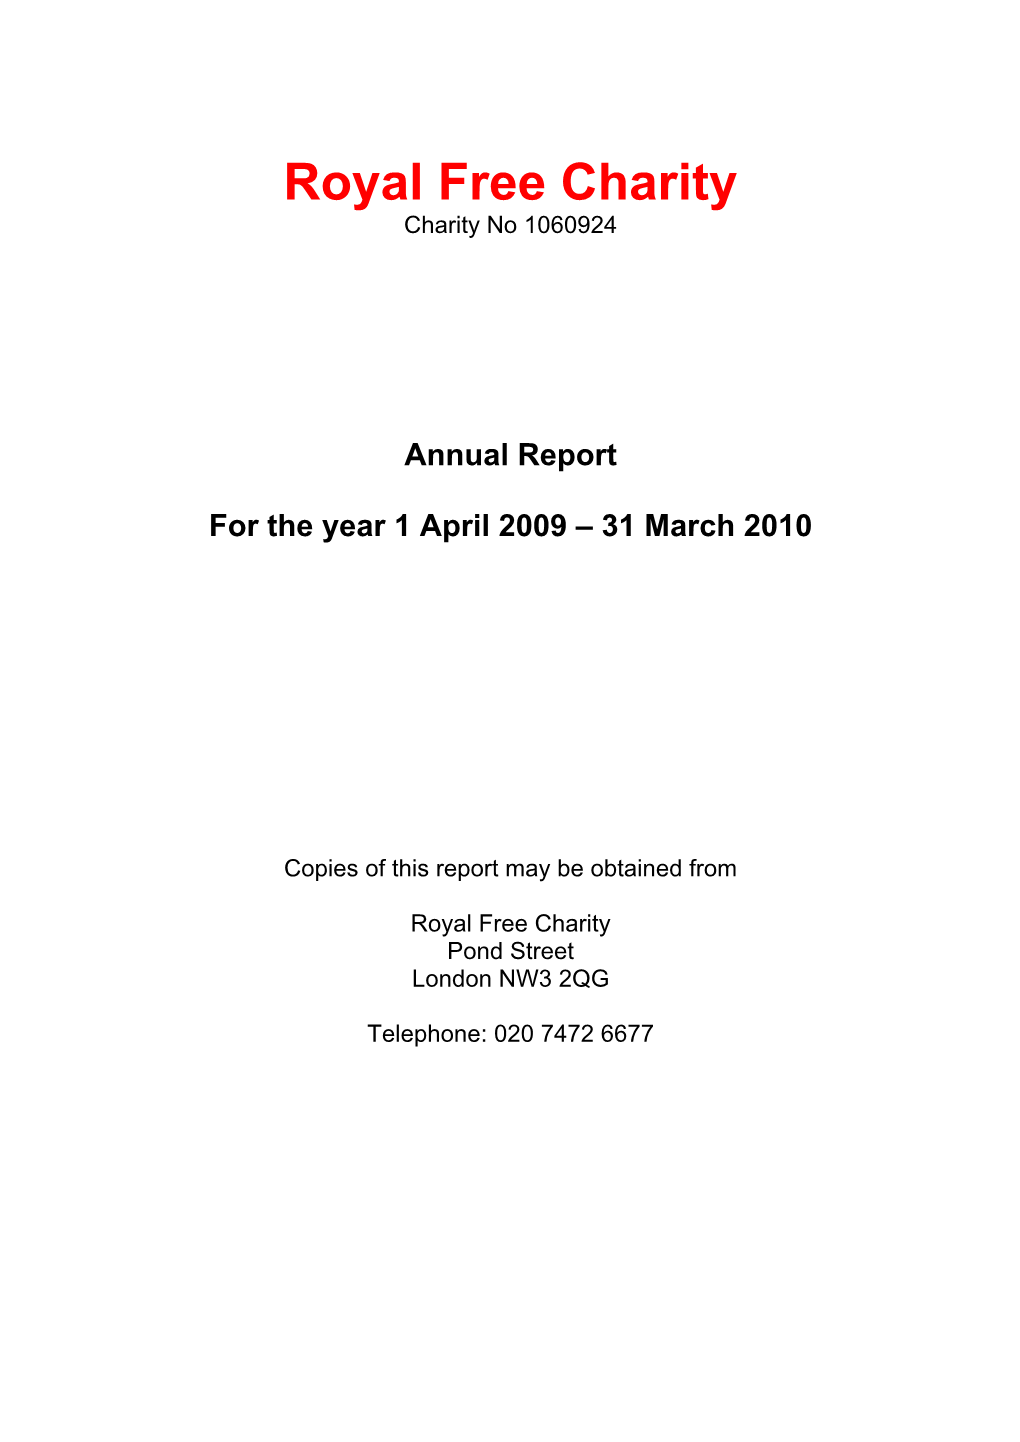 Annual Report 2009/2010 (.Pdf 969KB)